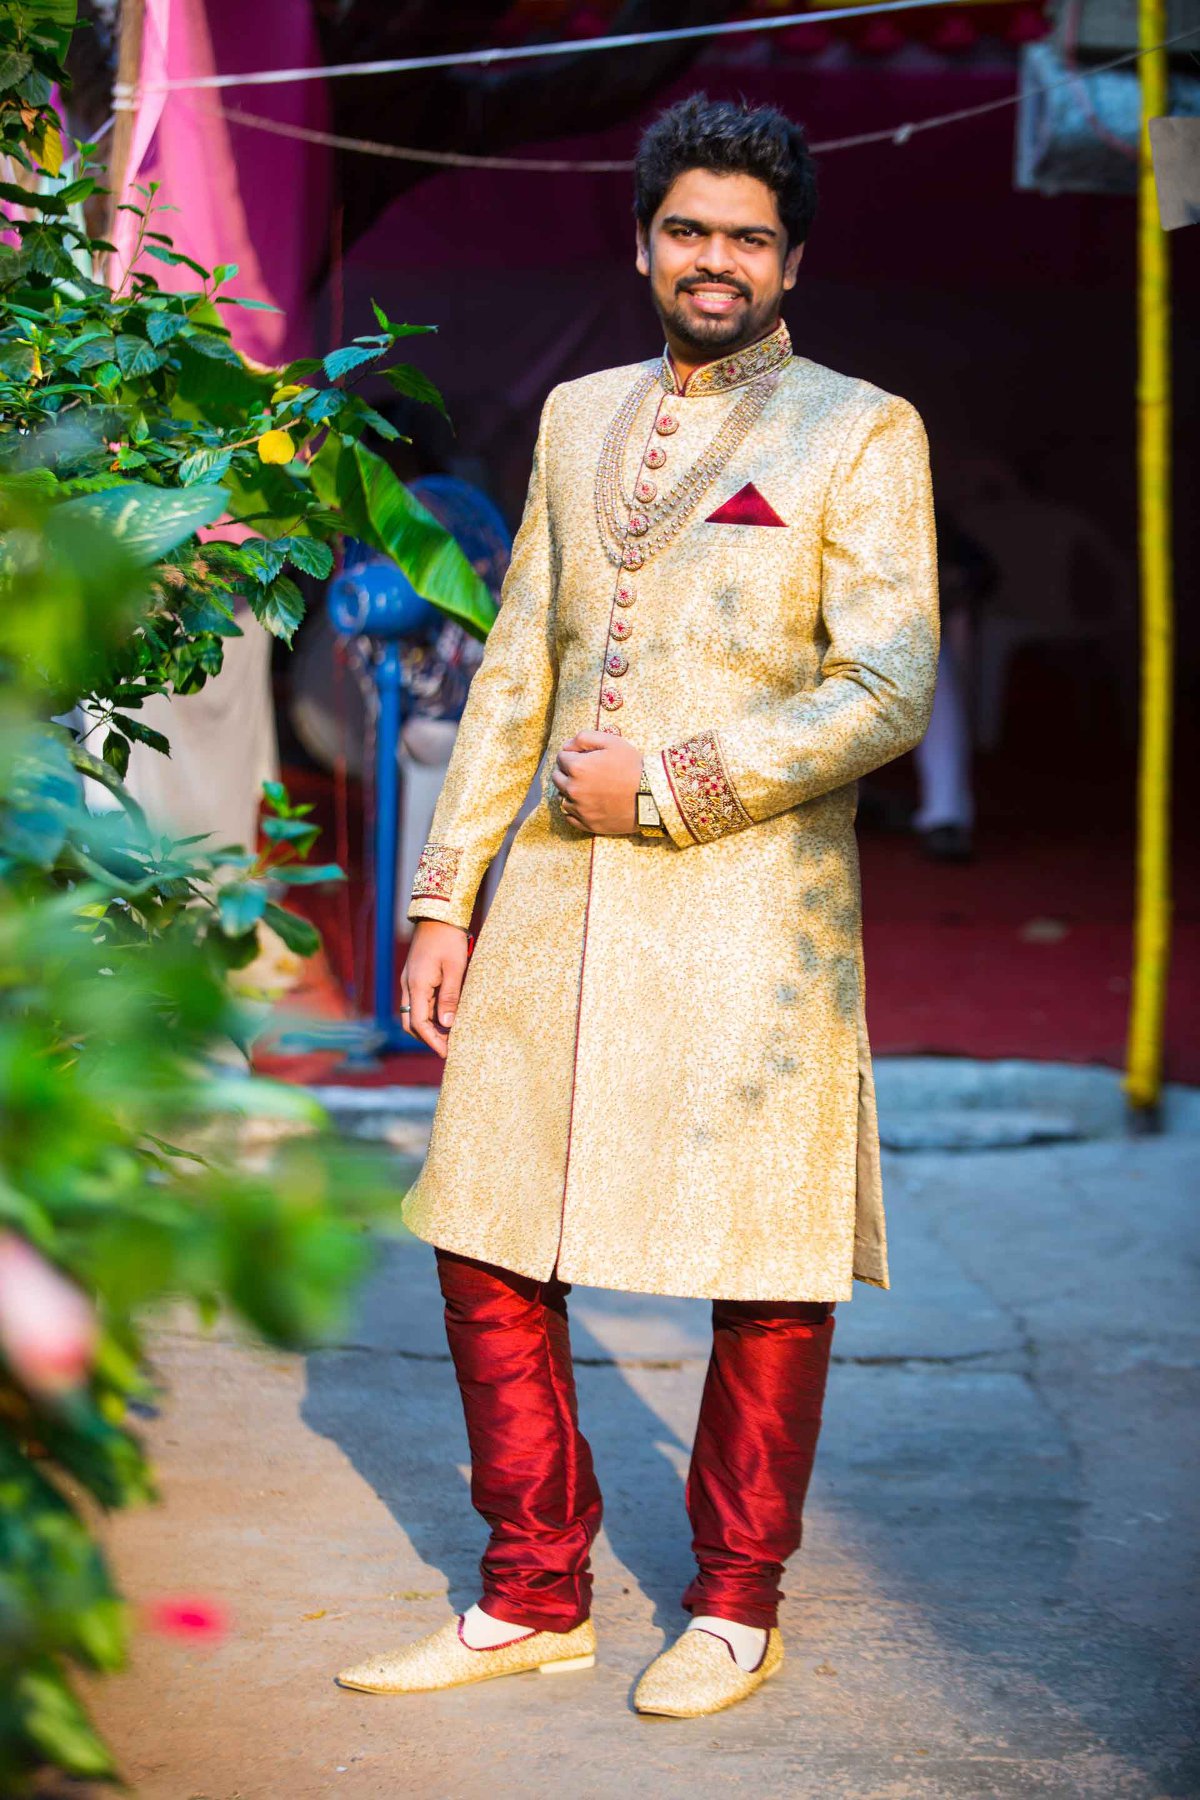 Manav Ethnic Happy Customer wearing a Golden Indo Western